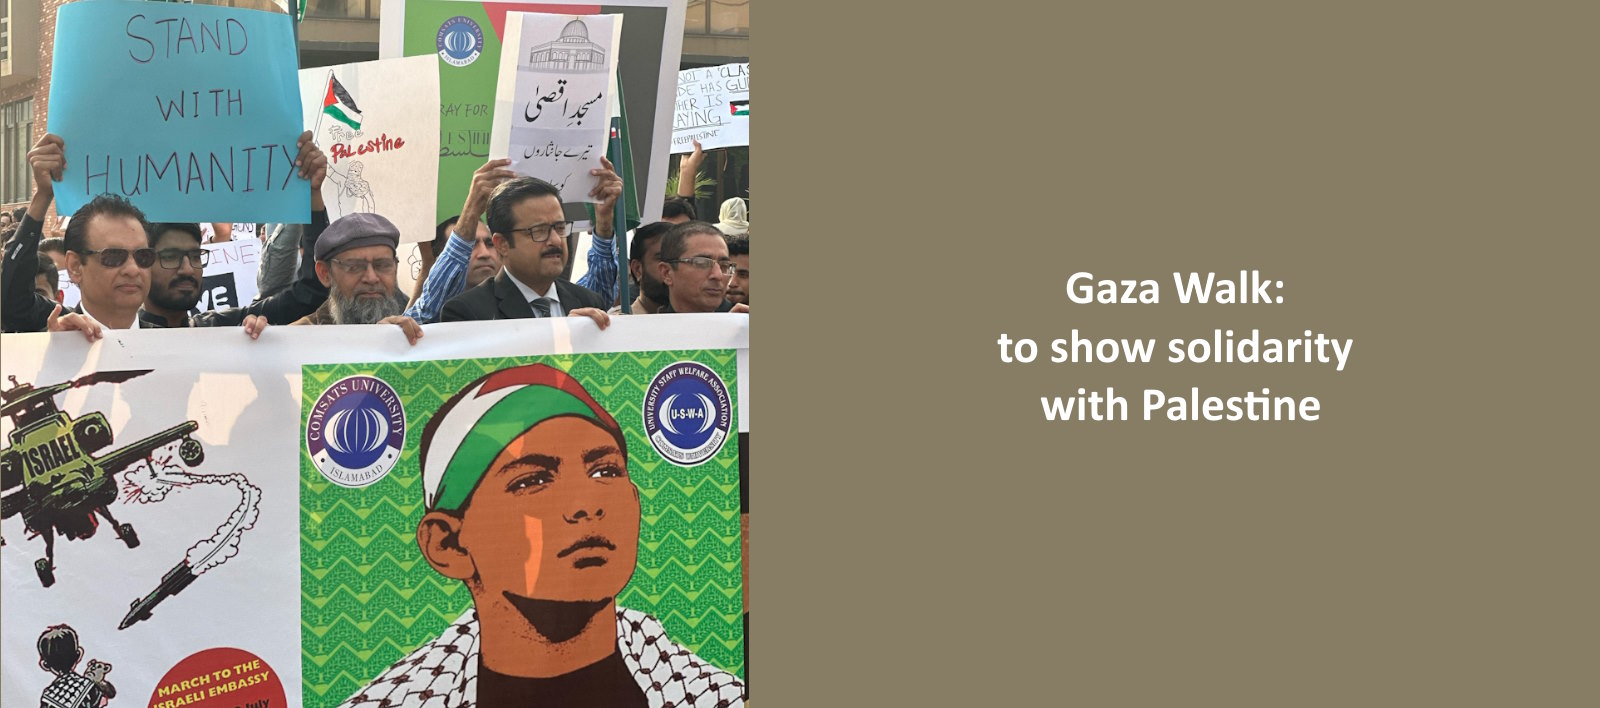 Gaza Walk: to show solidarity with Palestine